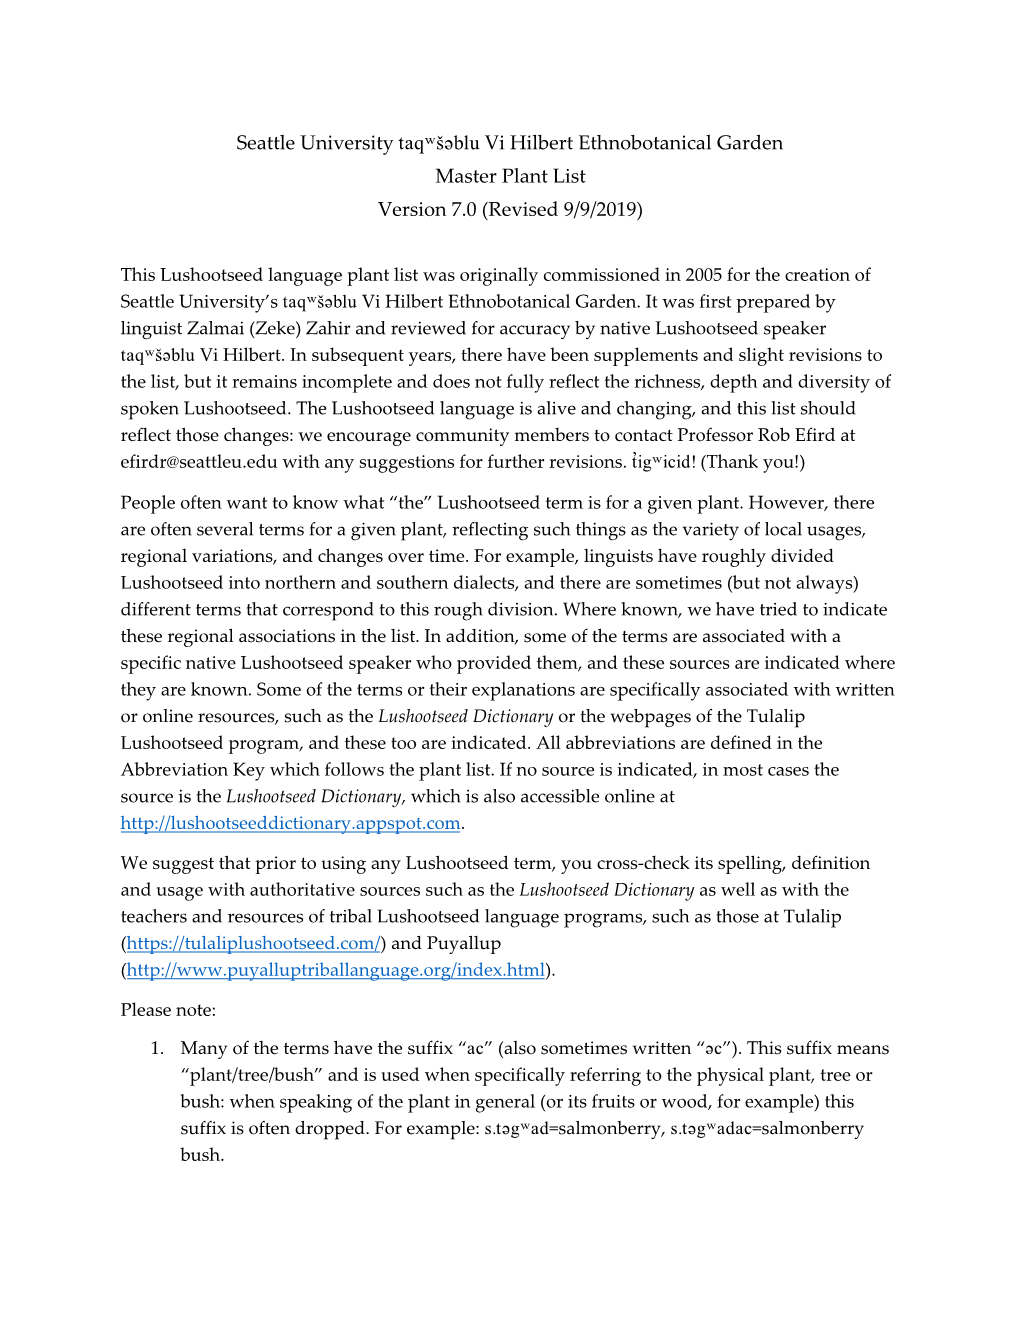 Seattle University Tarseblu Vi Hilbert Ethnobotanical Garden Master Plant List Version 7.0 (Revised 9/9/2019)